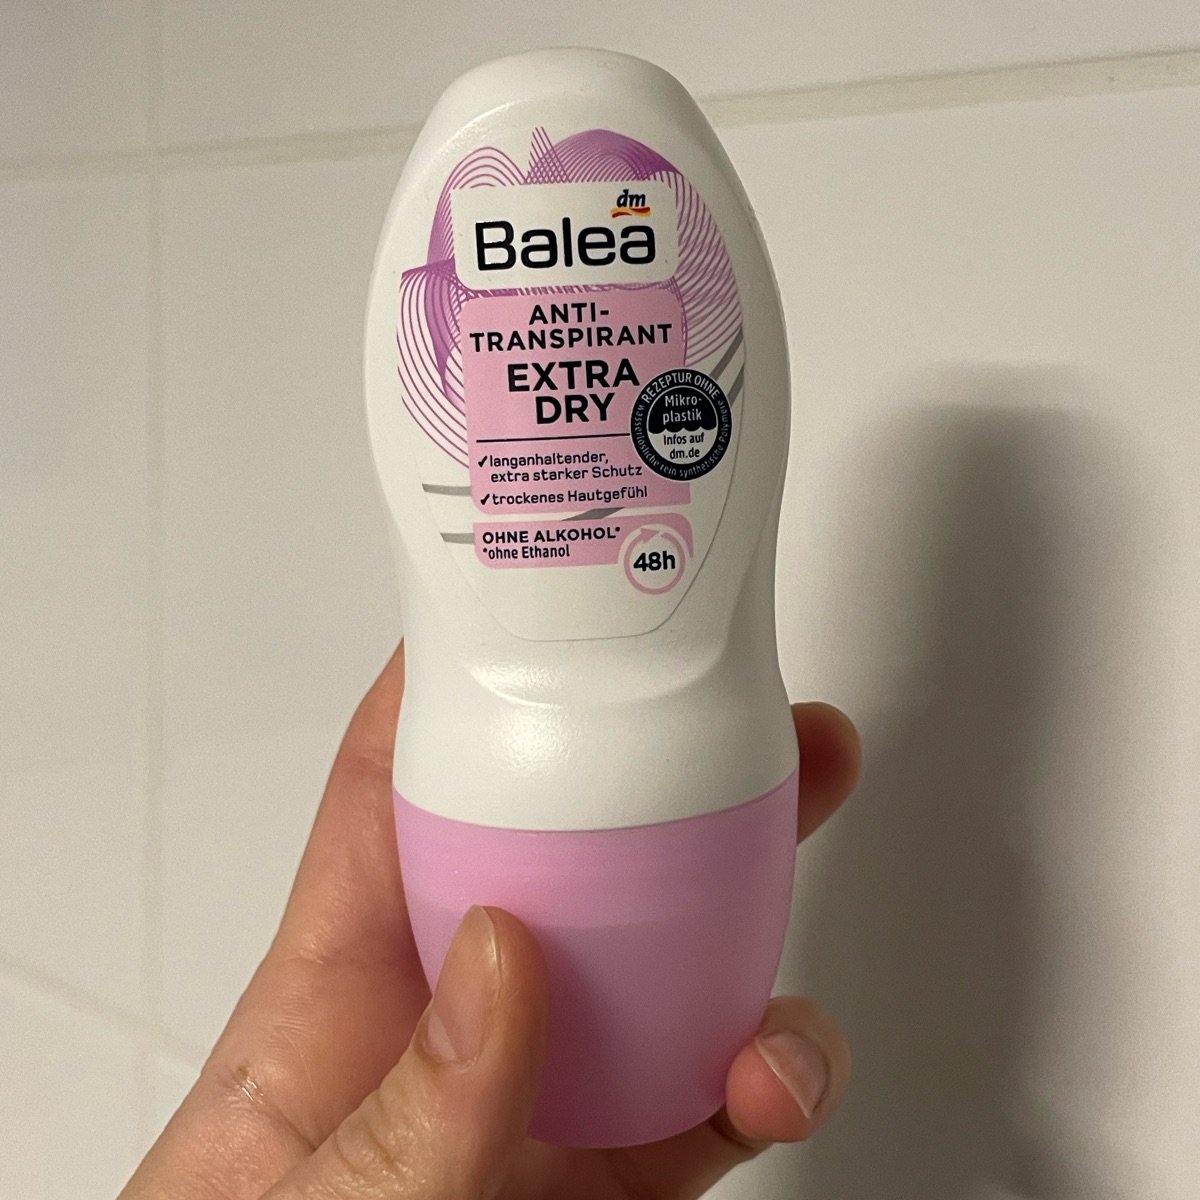 Dm balea deodorant extra dry Reviews | abillion